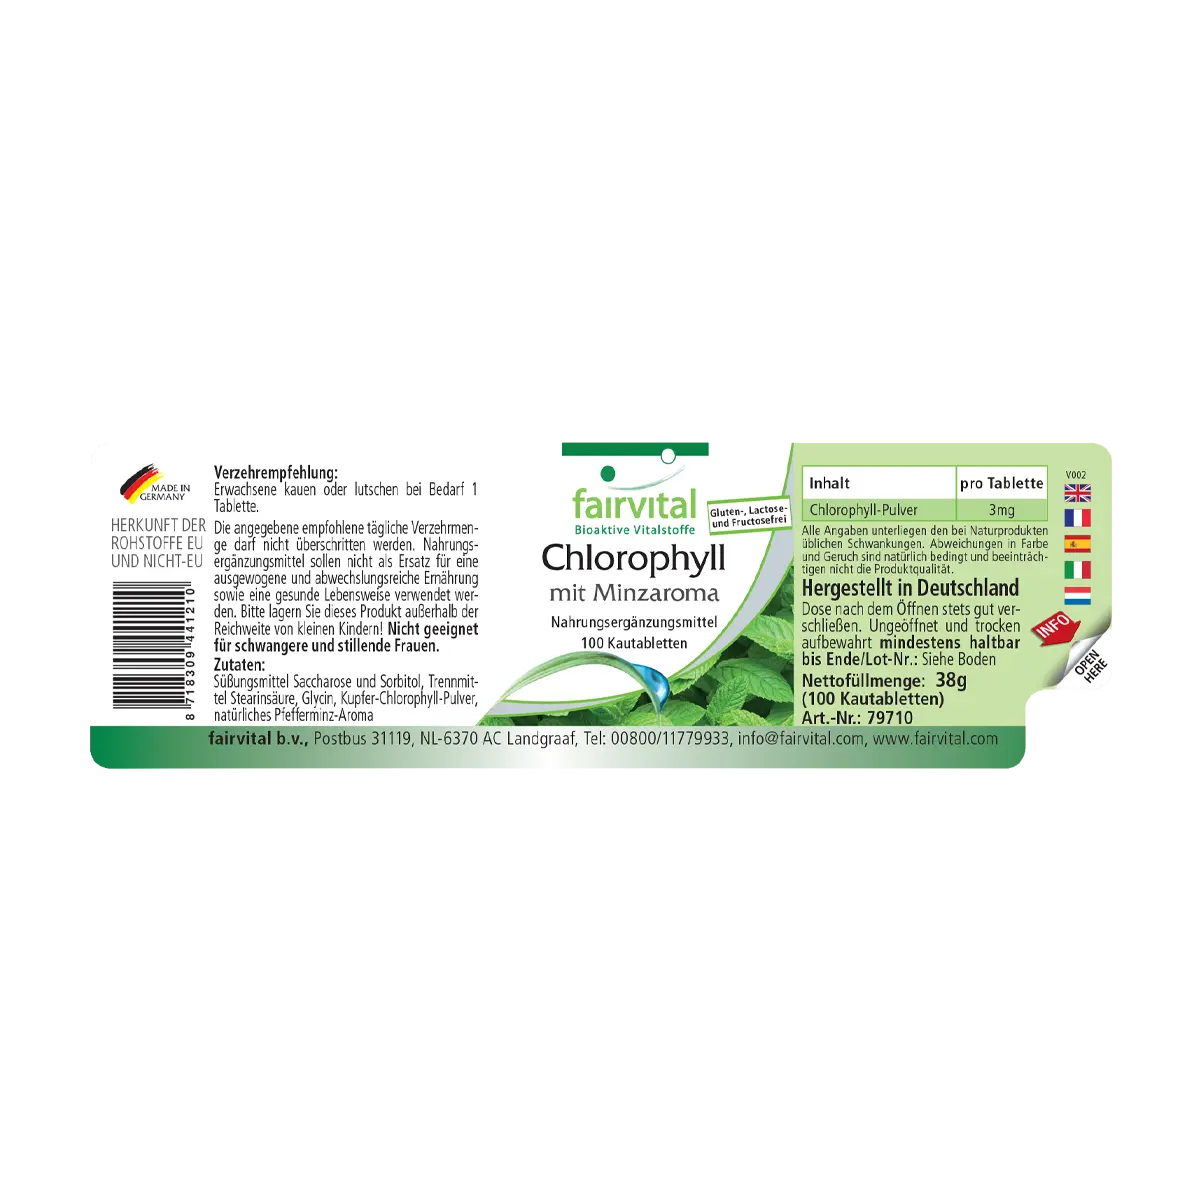 Chlorophyll mit Minzaroma